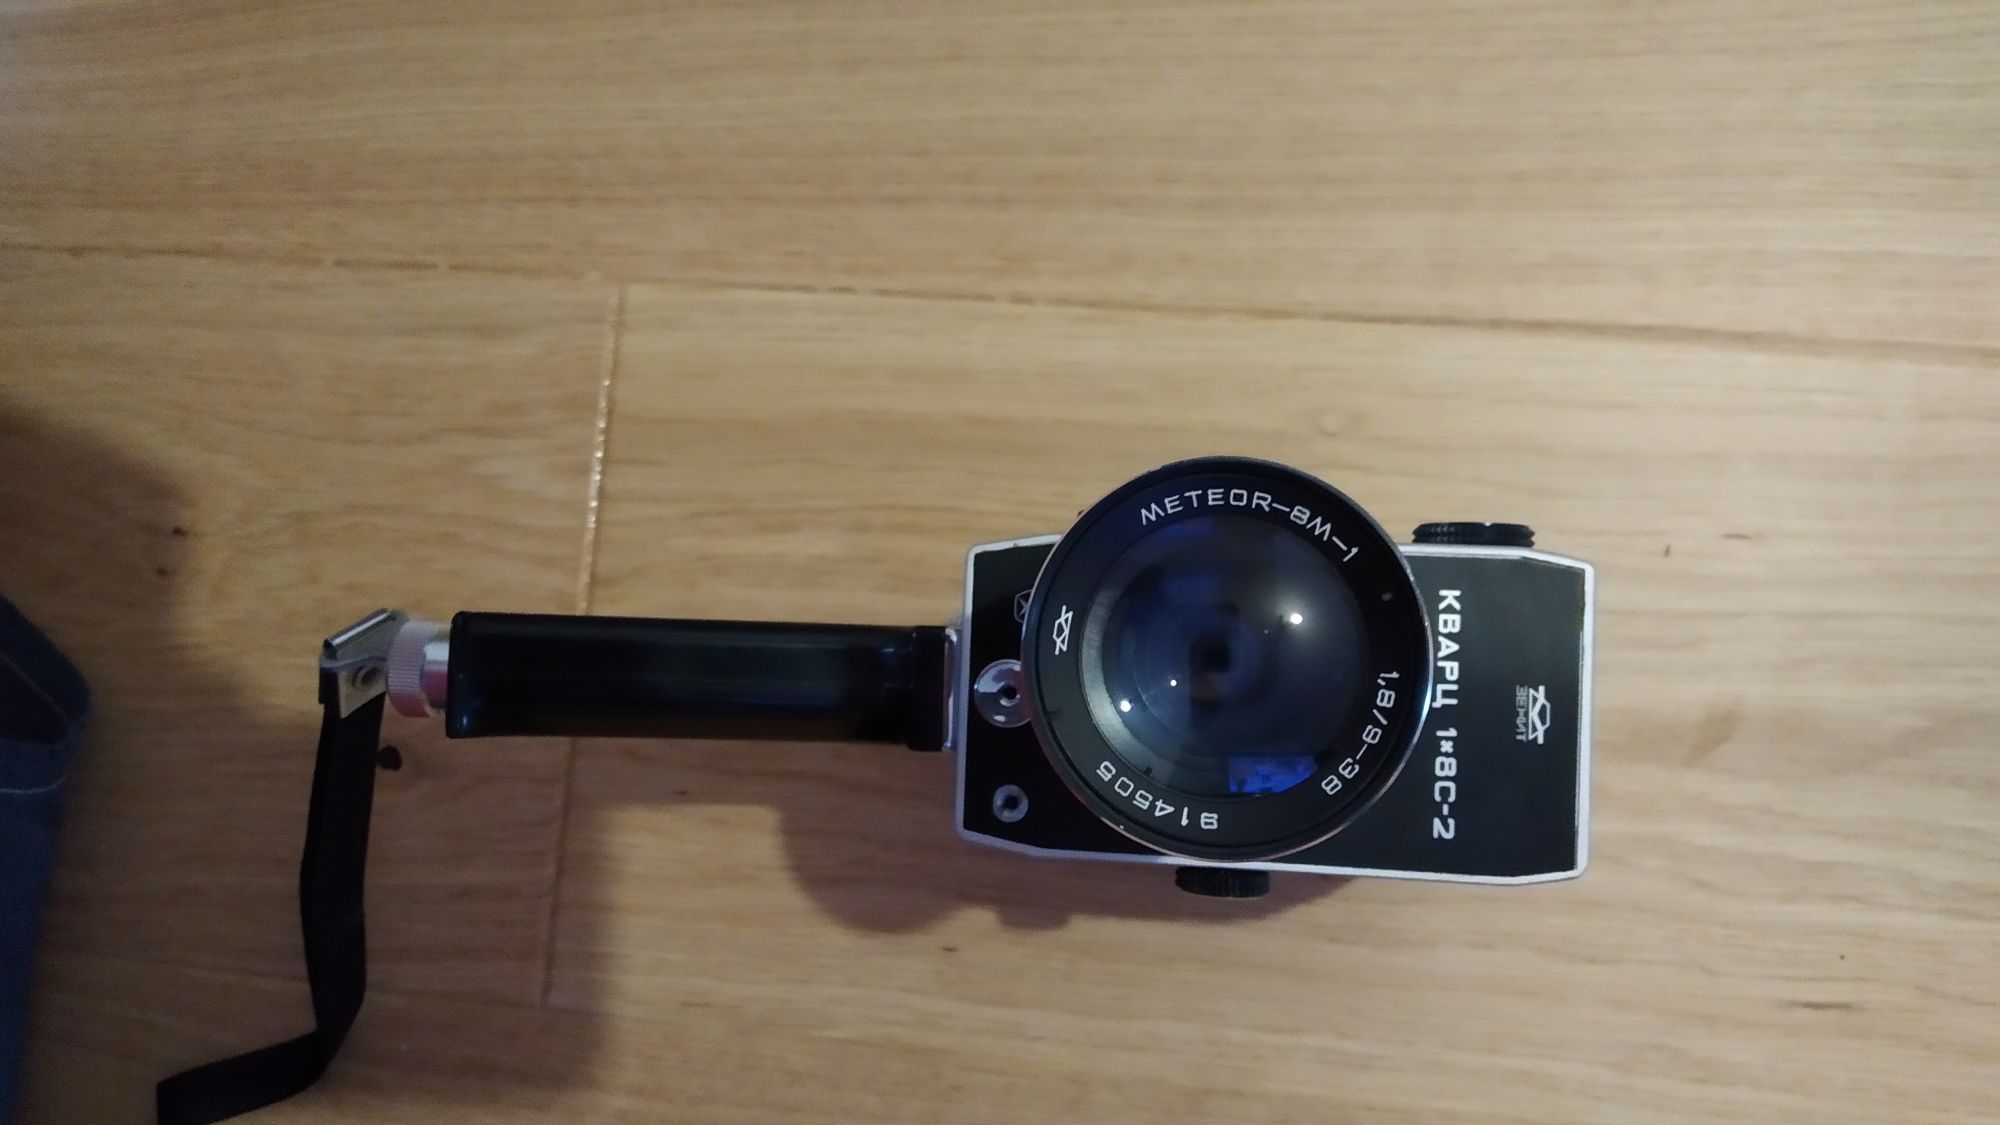 Kamera Kwarc 1x8C-2 Meteor 8M-1 filtry unikat kolekcjonerski